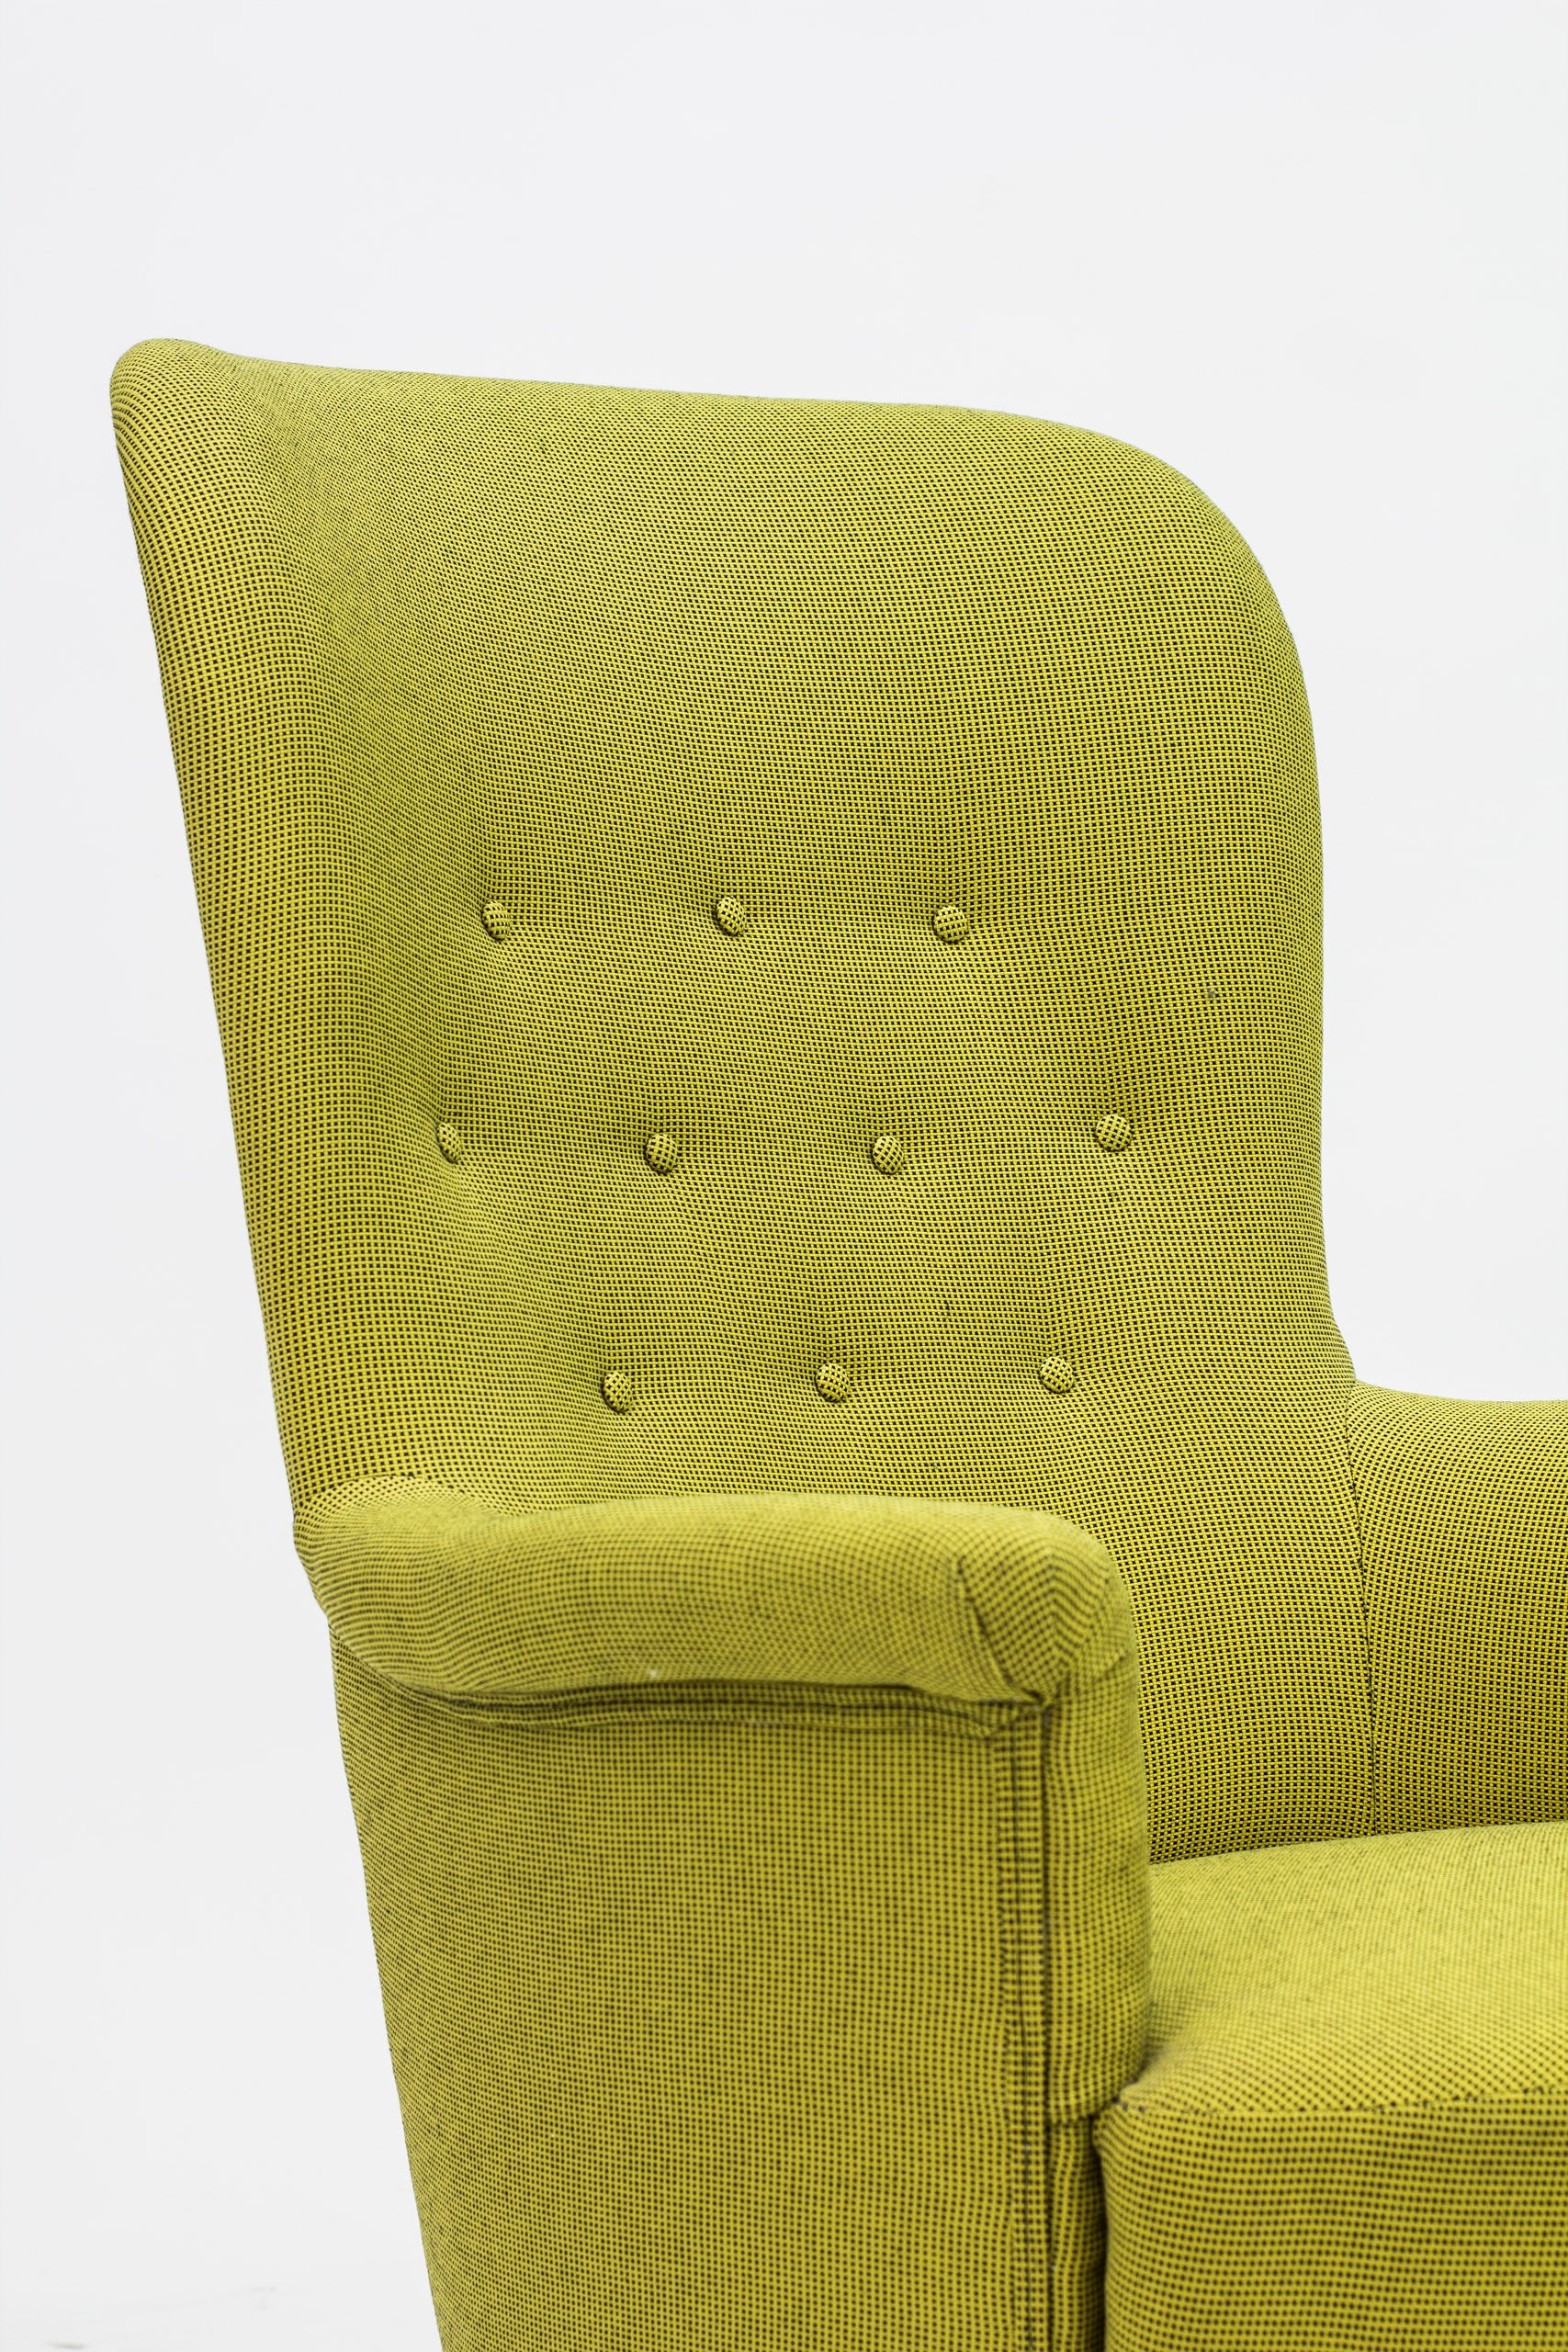 Fåtölj Marino av Carl Malmsten. H: 97cm, B: 70cm, D: 80cm. Nyklädd. Easy chair “Marino” by Carl Malmsten. H: 97cm/38,2″, B: 70cm/27,6″, D. 80cm/31,5″. New fabric